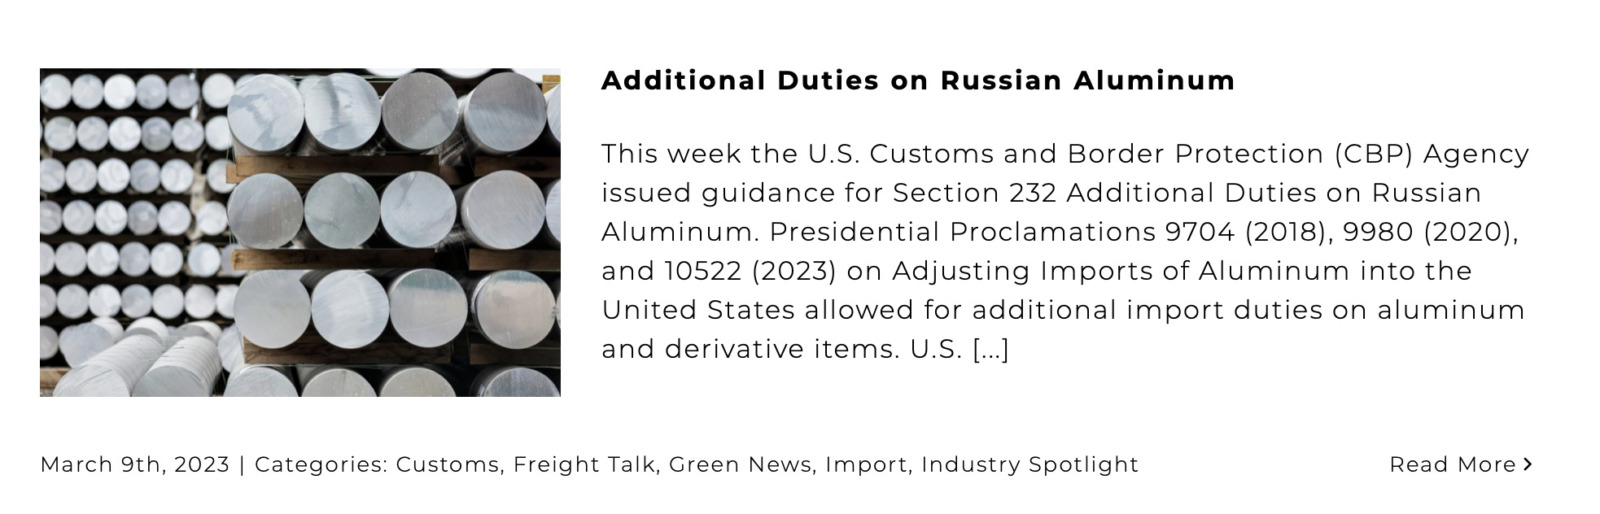 Additional Duties on Russian Aluminum